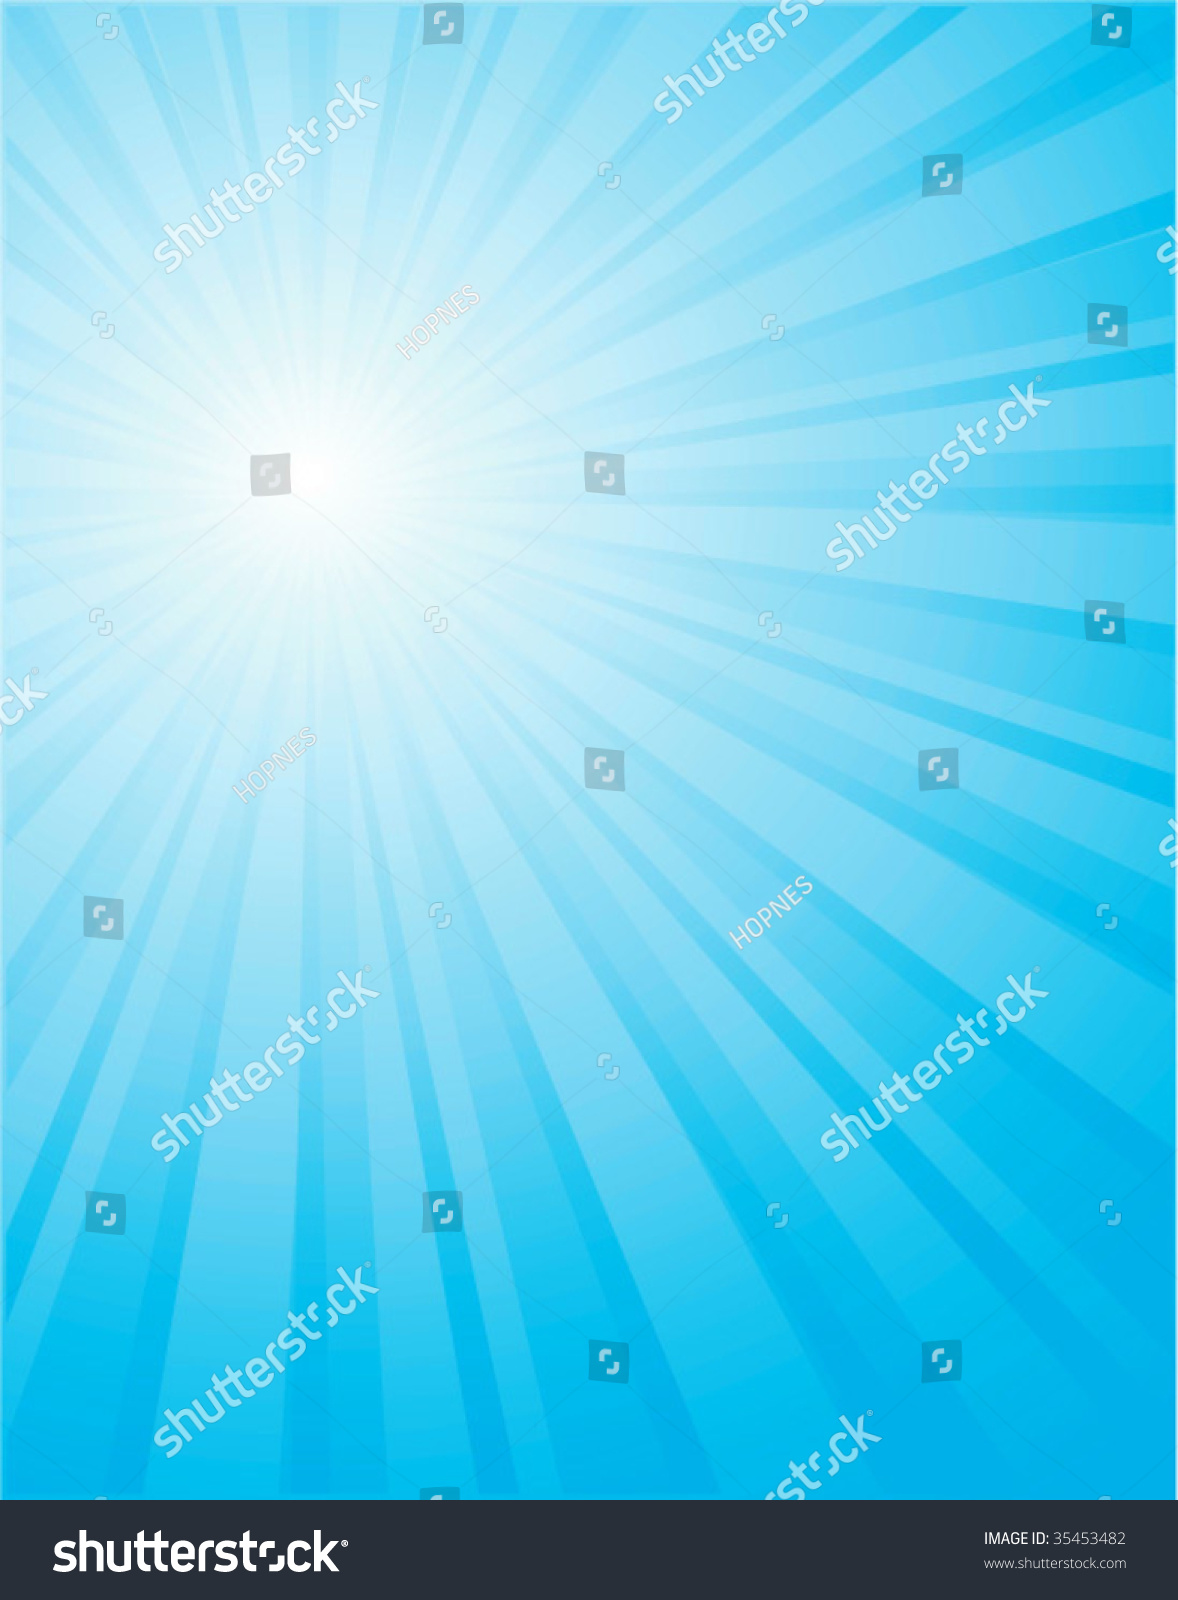 Blue Sun Rays Background Vector - 35453482 : Shutterstock